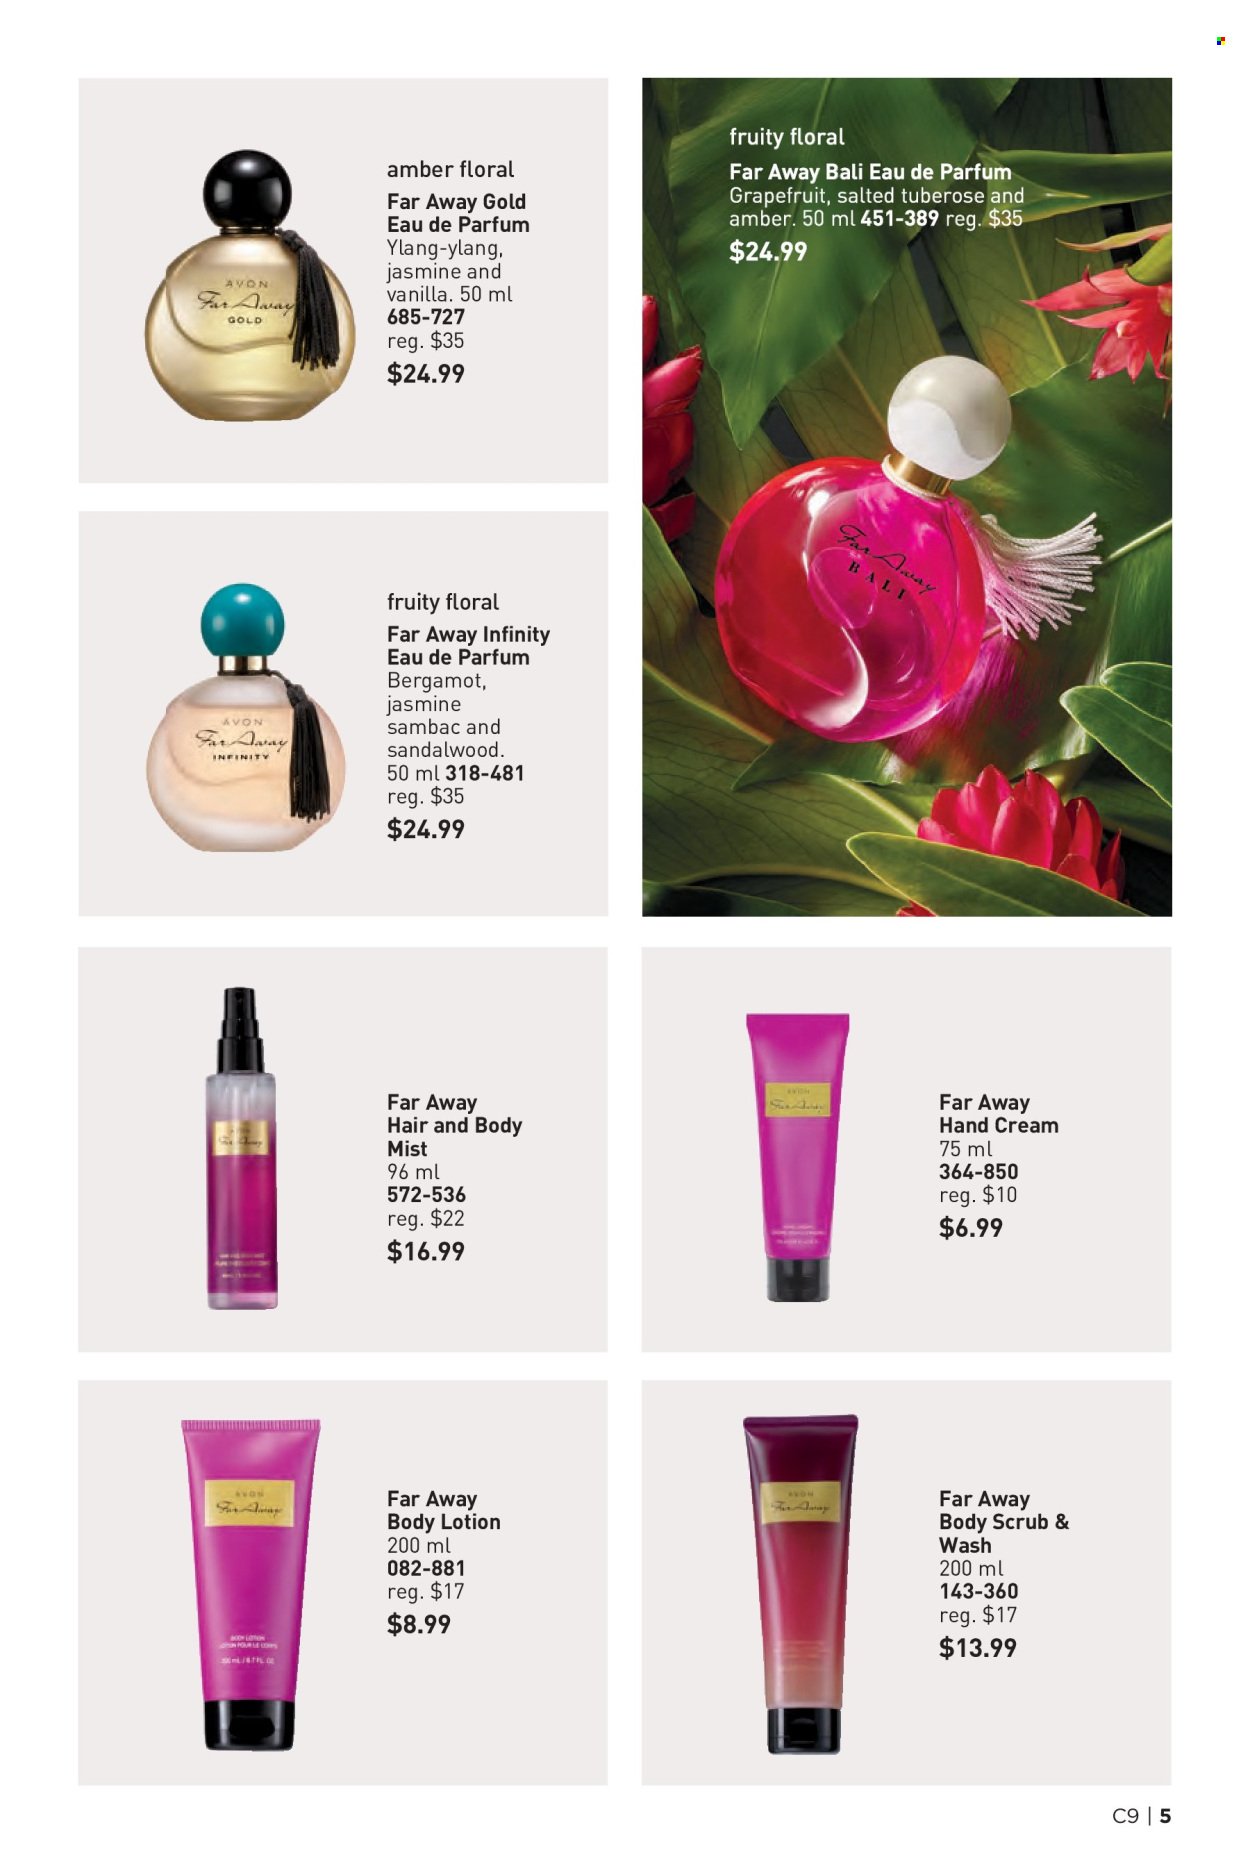 thumbnail - Avon Flyer - Sales products - Avon, Infinity, body lotion, body mist, body scrub, hand cream, eau de parfum, far away. Page 5.